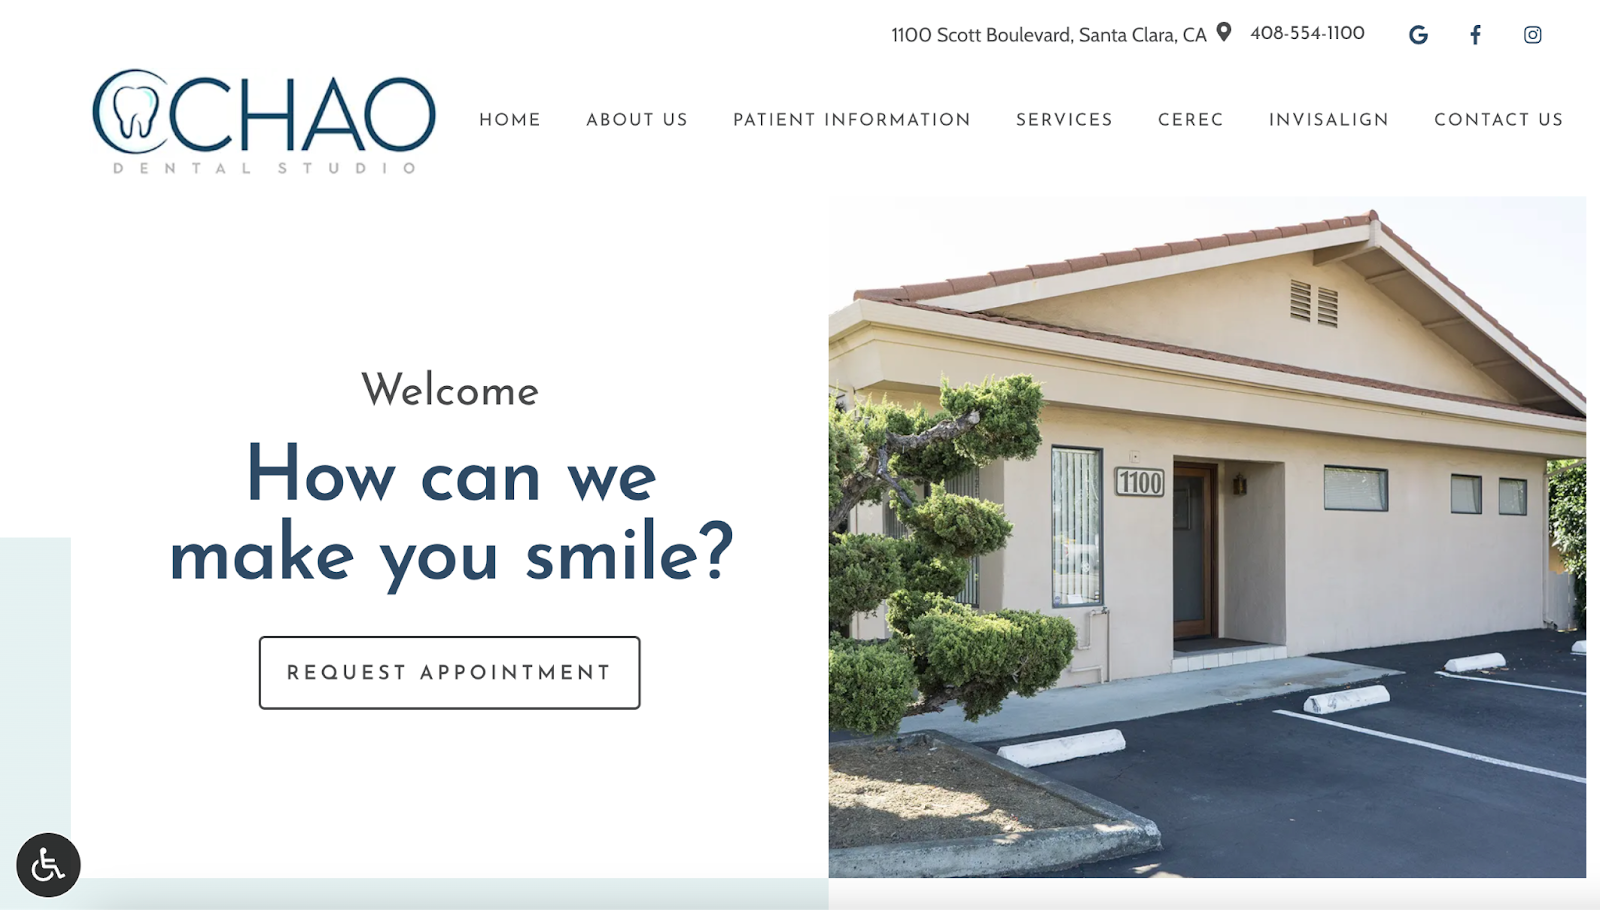 customer service stories, chao dental studios